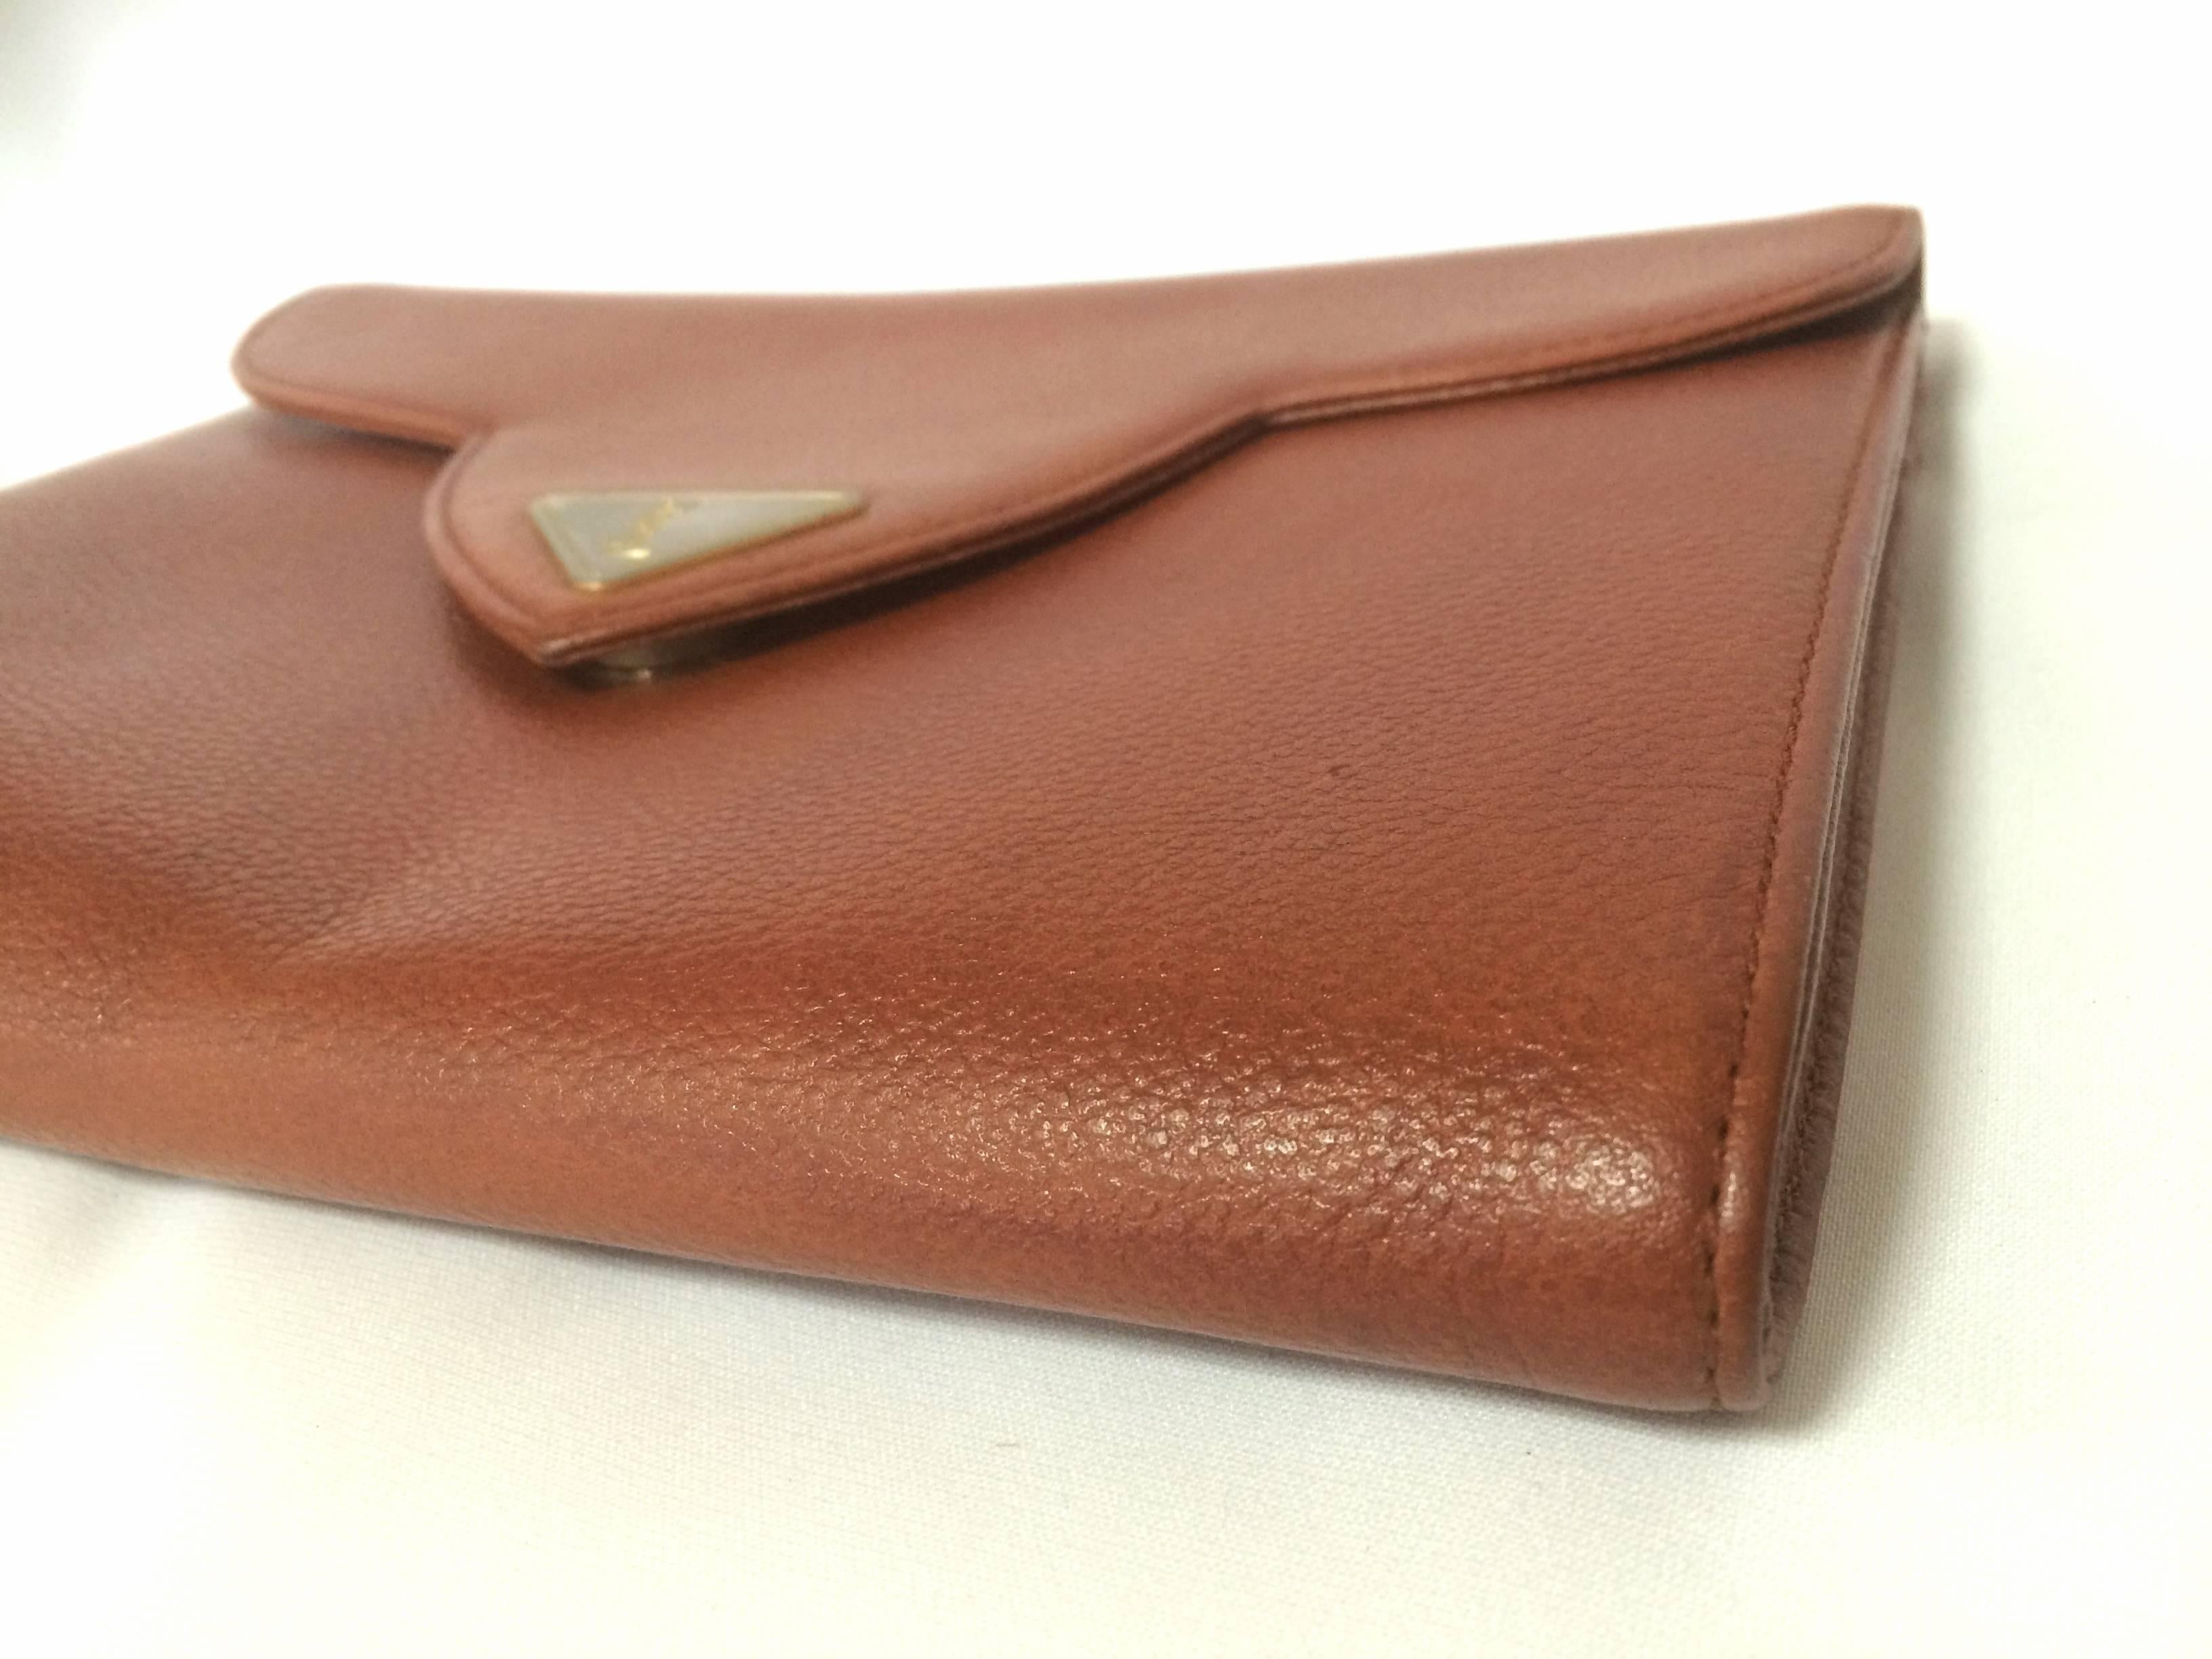 Brown Vintage Yves Saint Laurent genuine brown leather clutch purse with beak tip flap